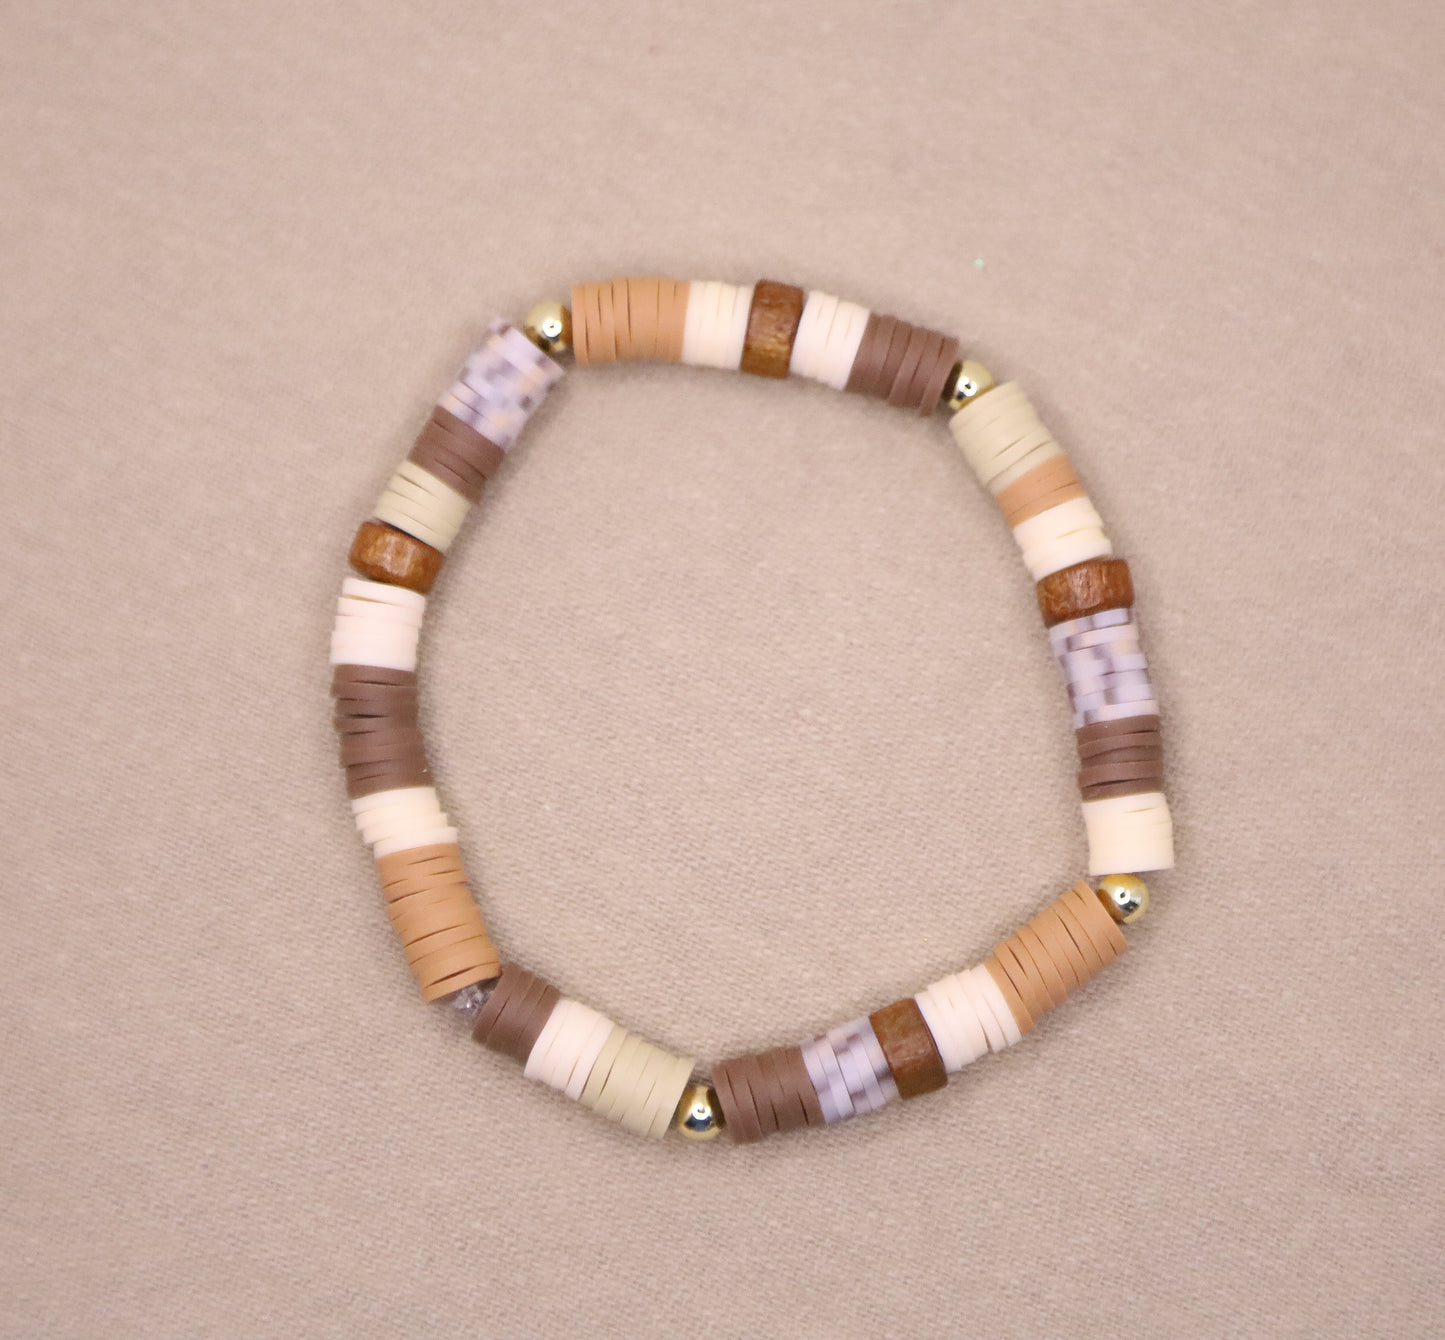 Chip Bracelet in neutral tones stretchy bracelet